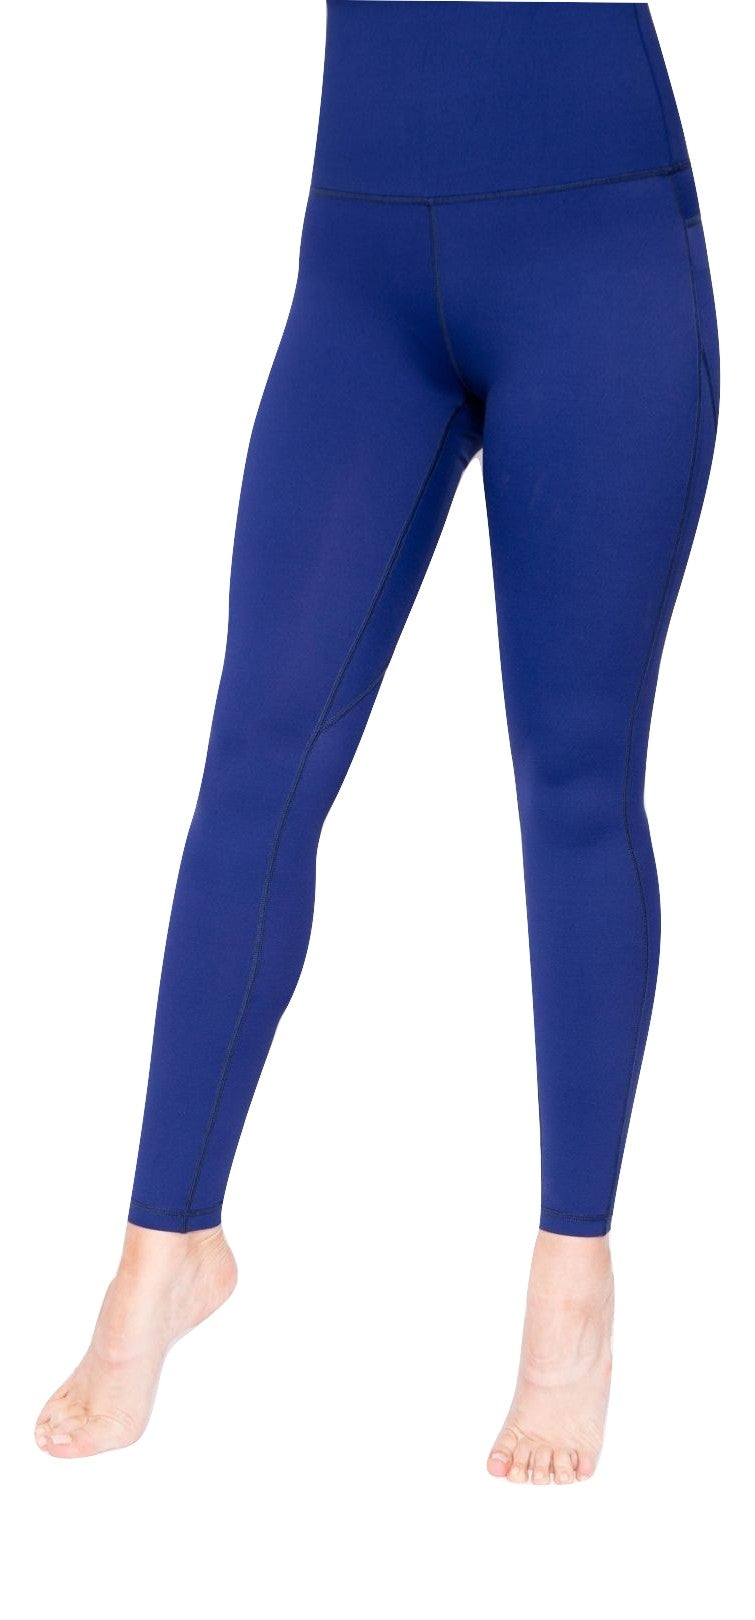 xinqinghao yoga leggings for women ladies' printed sports leggings yoga  pants women yoga pants light blue m 